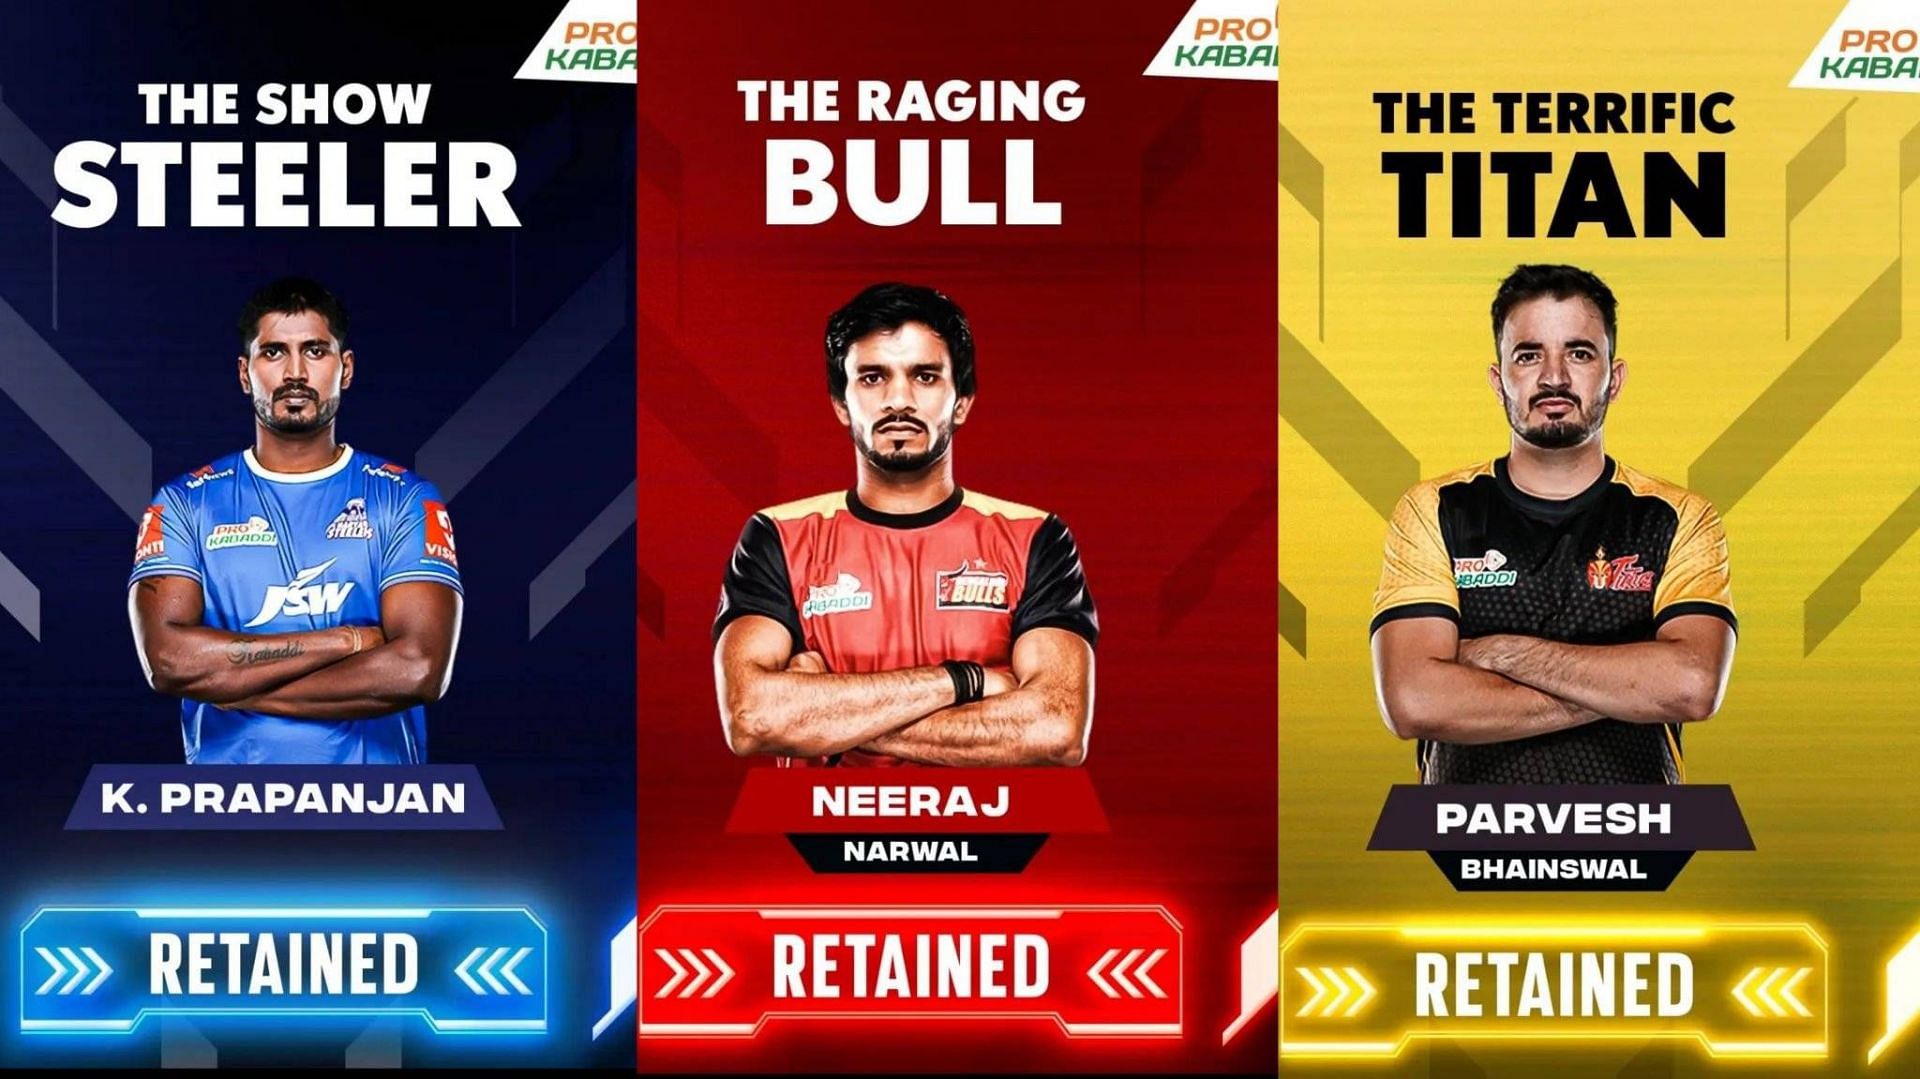 K Prapanjan, Neeraj Narwal and Parvesh Bhainswal have been retained (Image: Instagram/Pro Kabaddi)